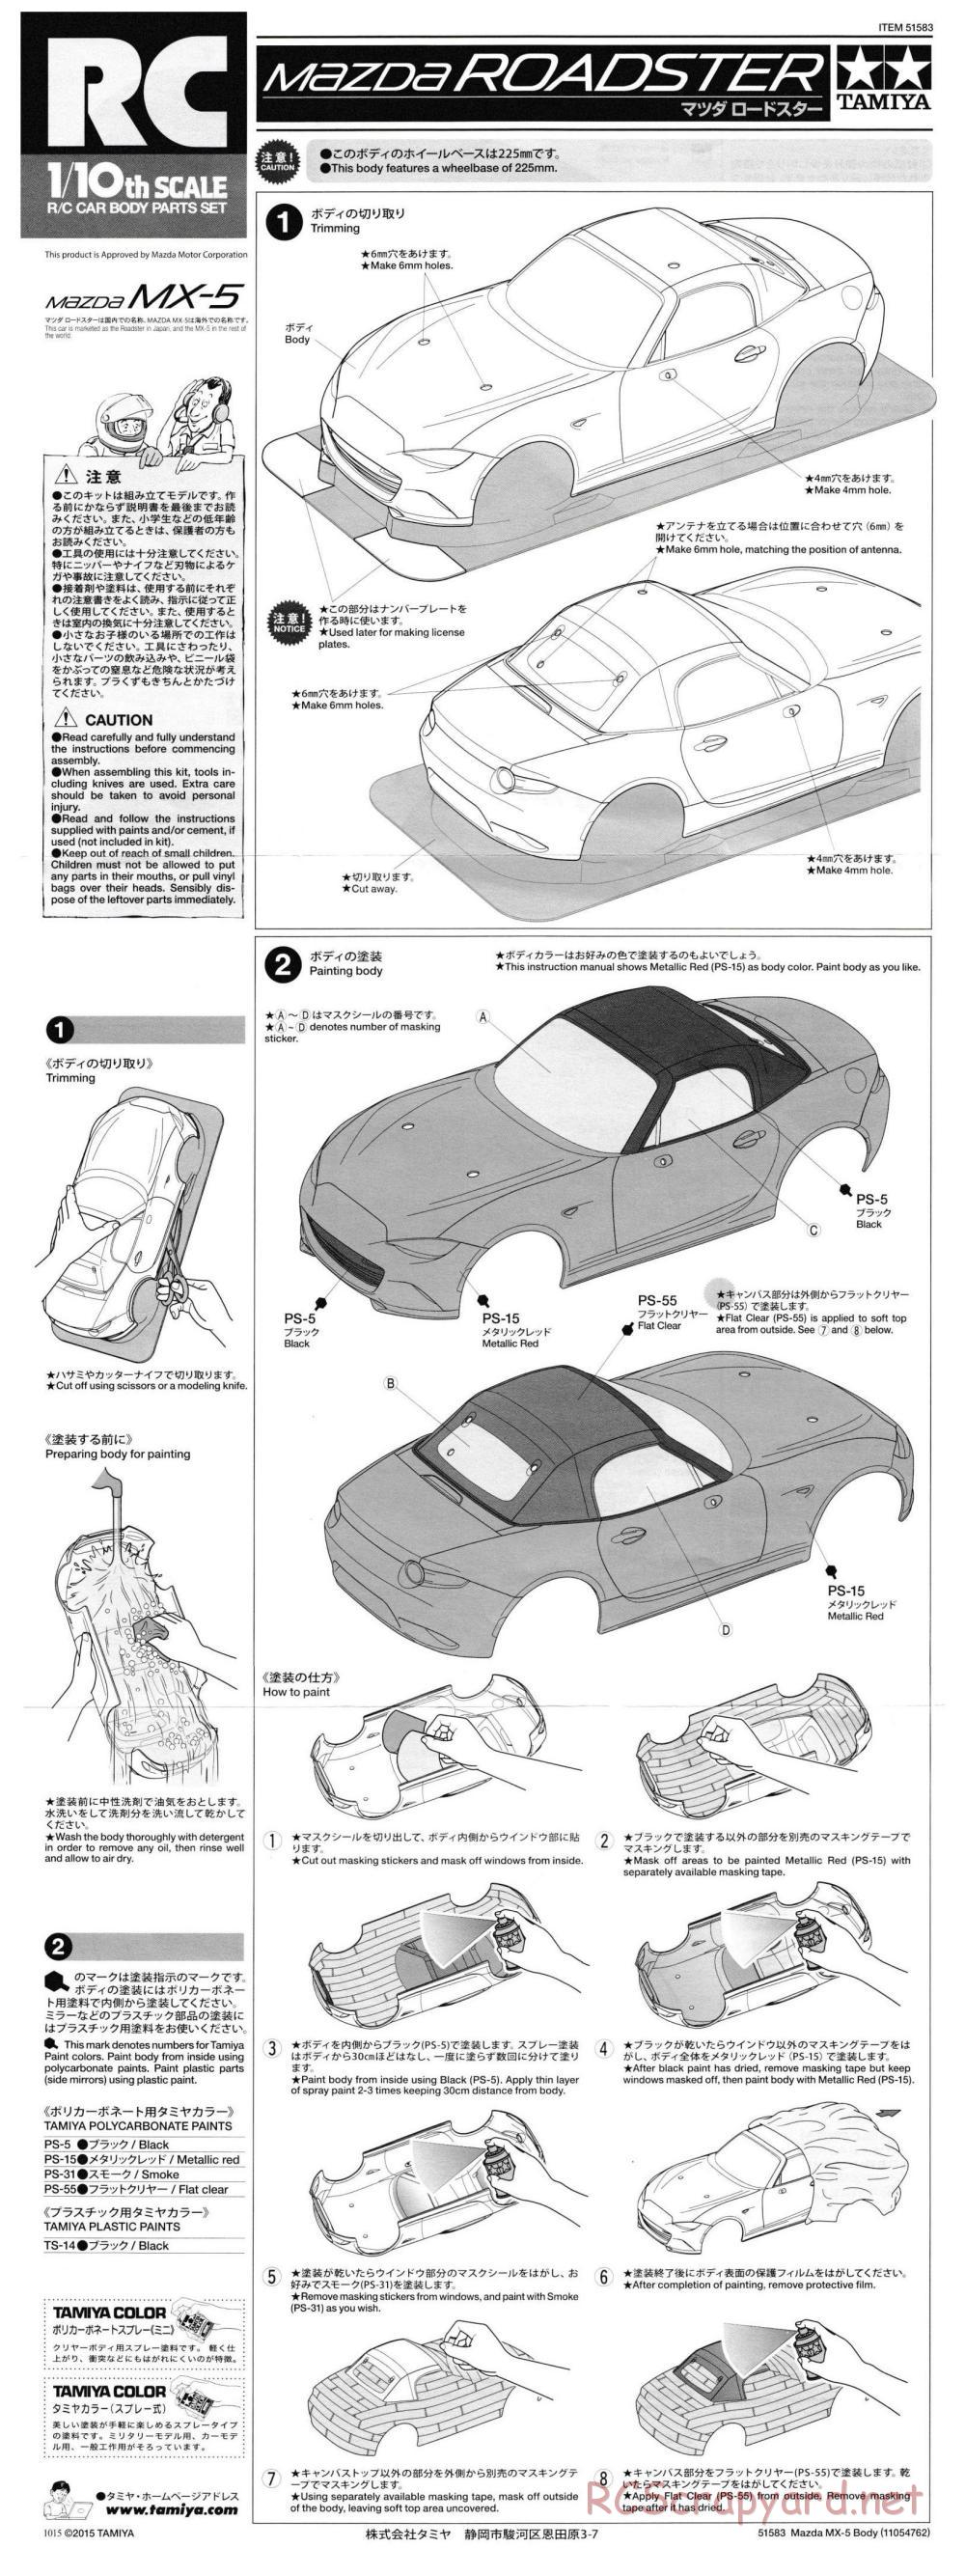 Tamiya - Mazda Roadster MX-5 - M-05 Chassis - Body Manual - Page 1